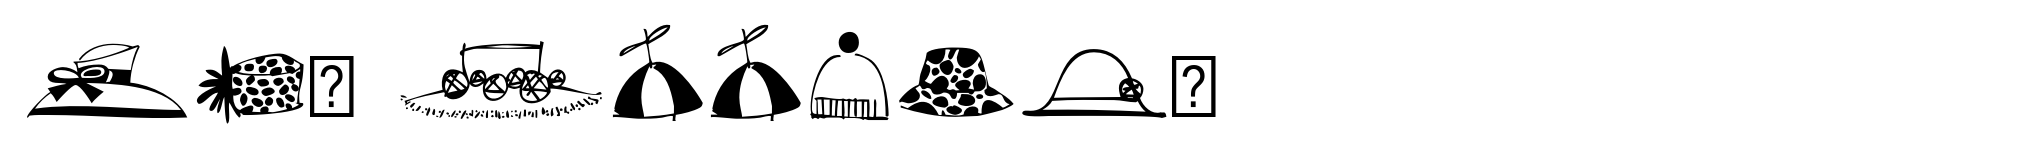 Hat Doodles image